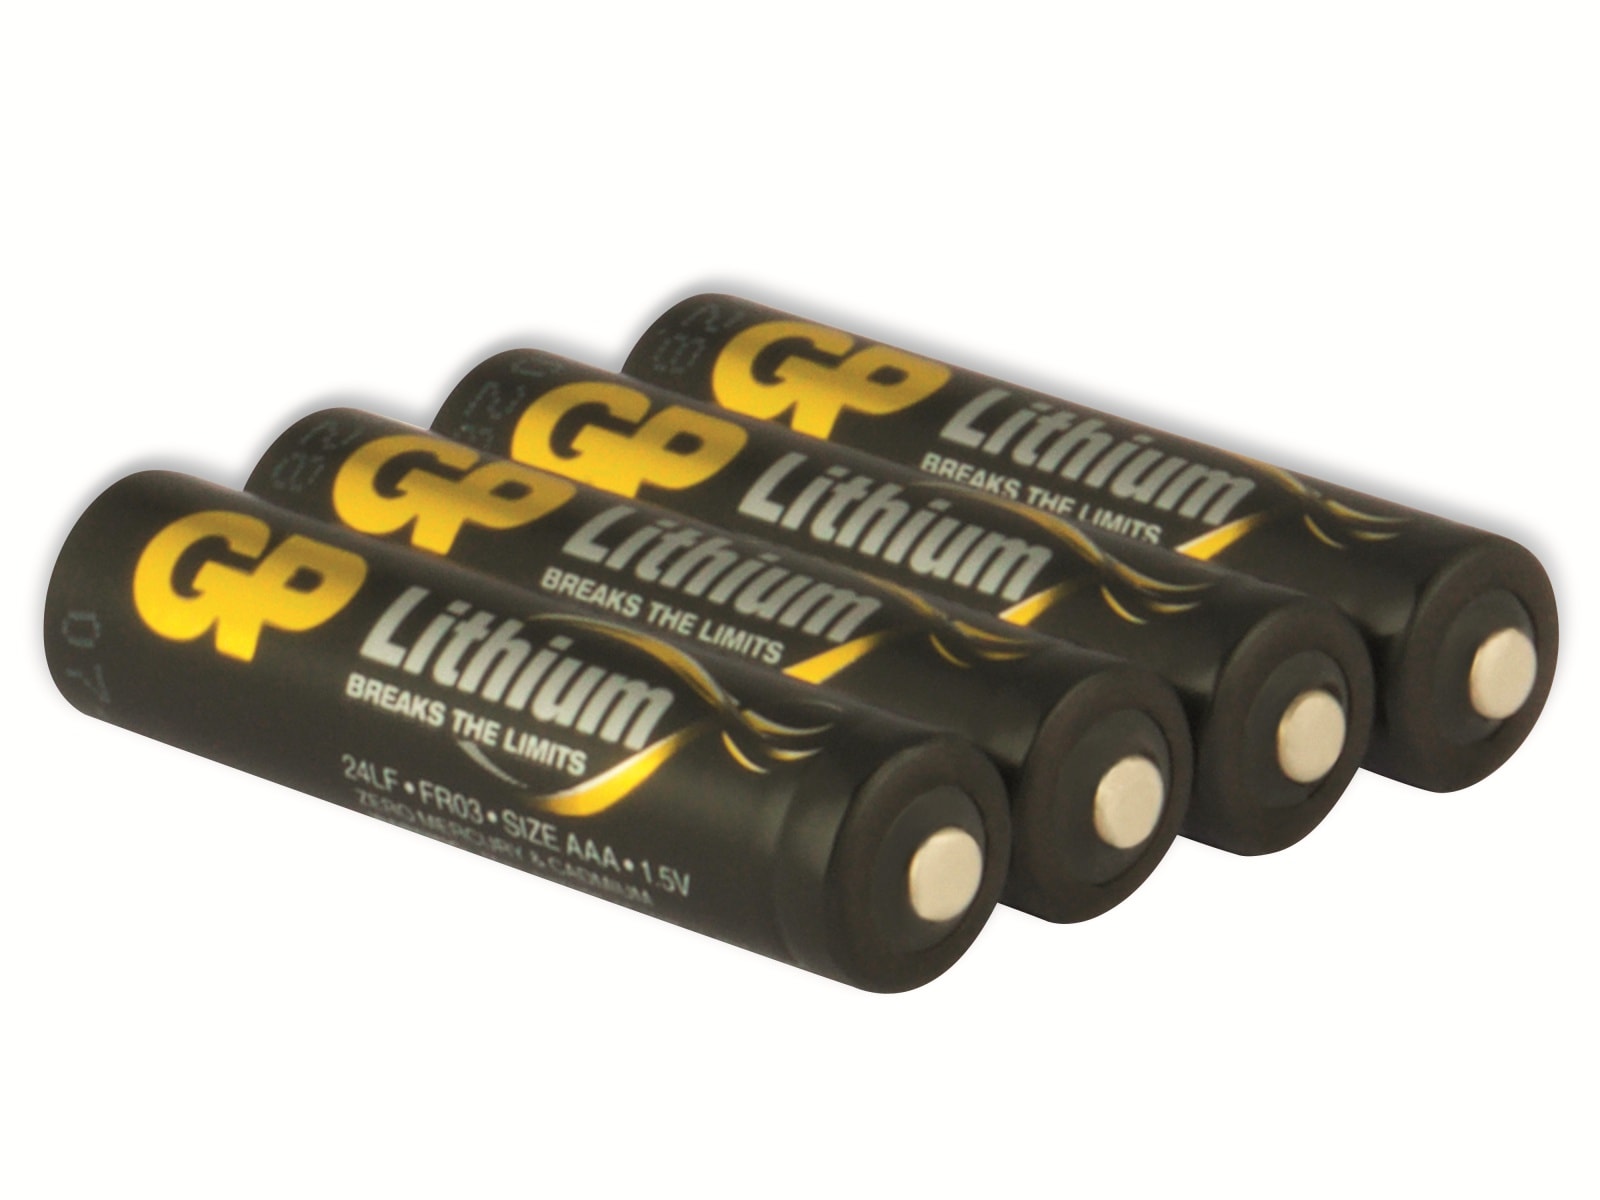 GP Micro-Batterie EXCELLENT Lithium, 4 Stück